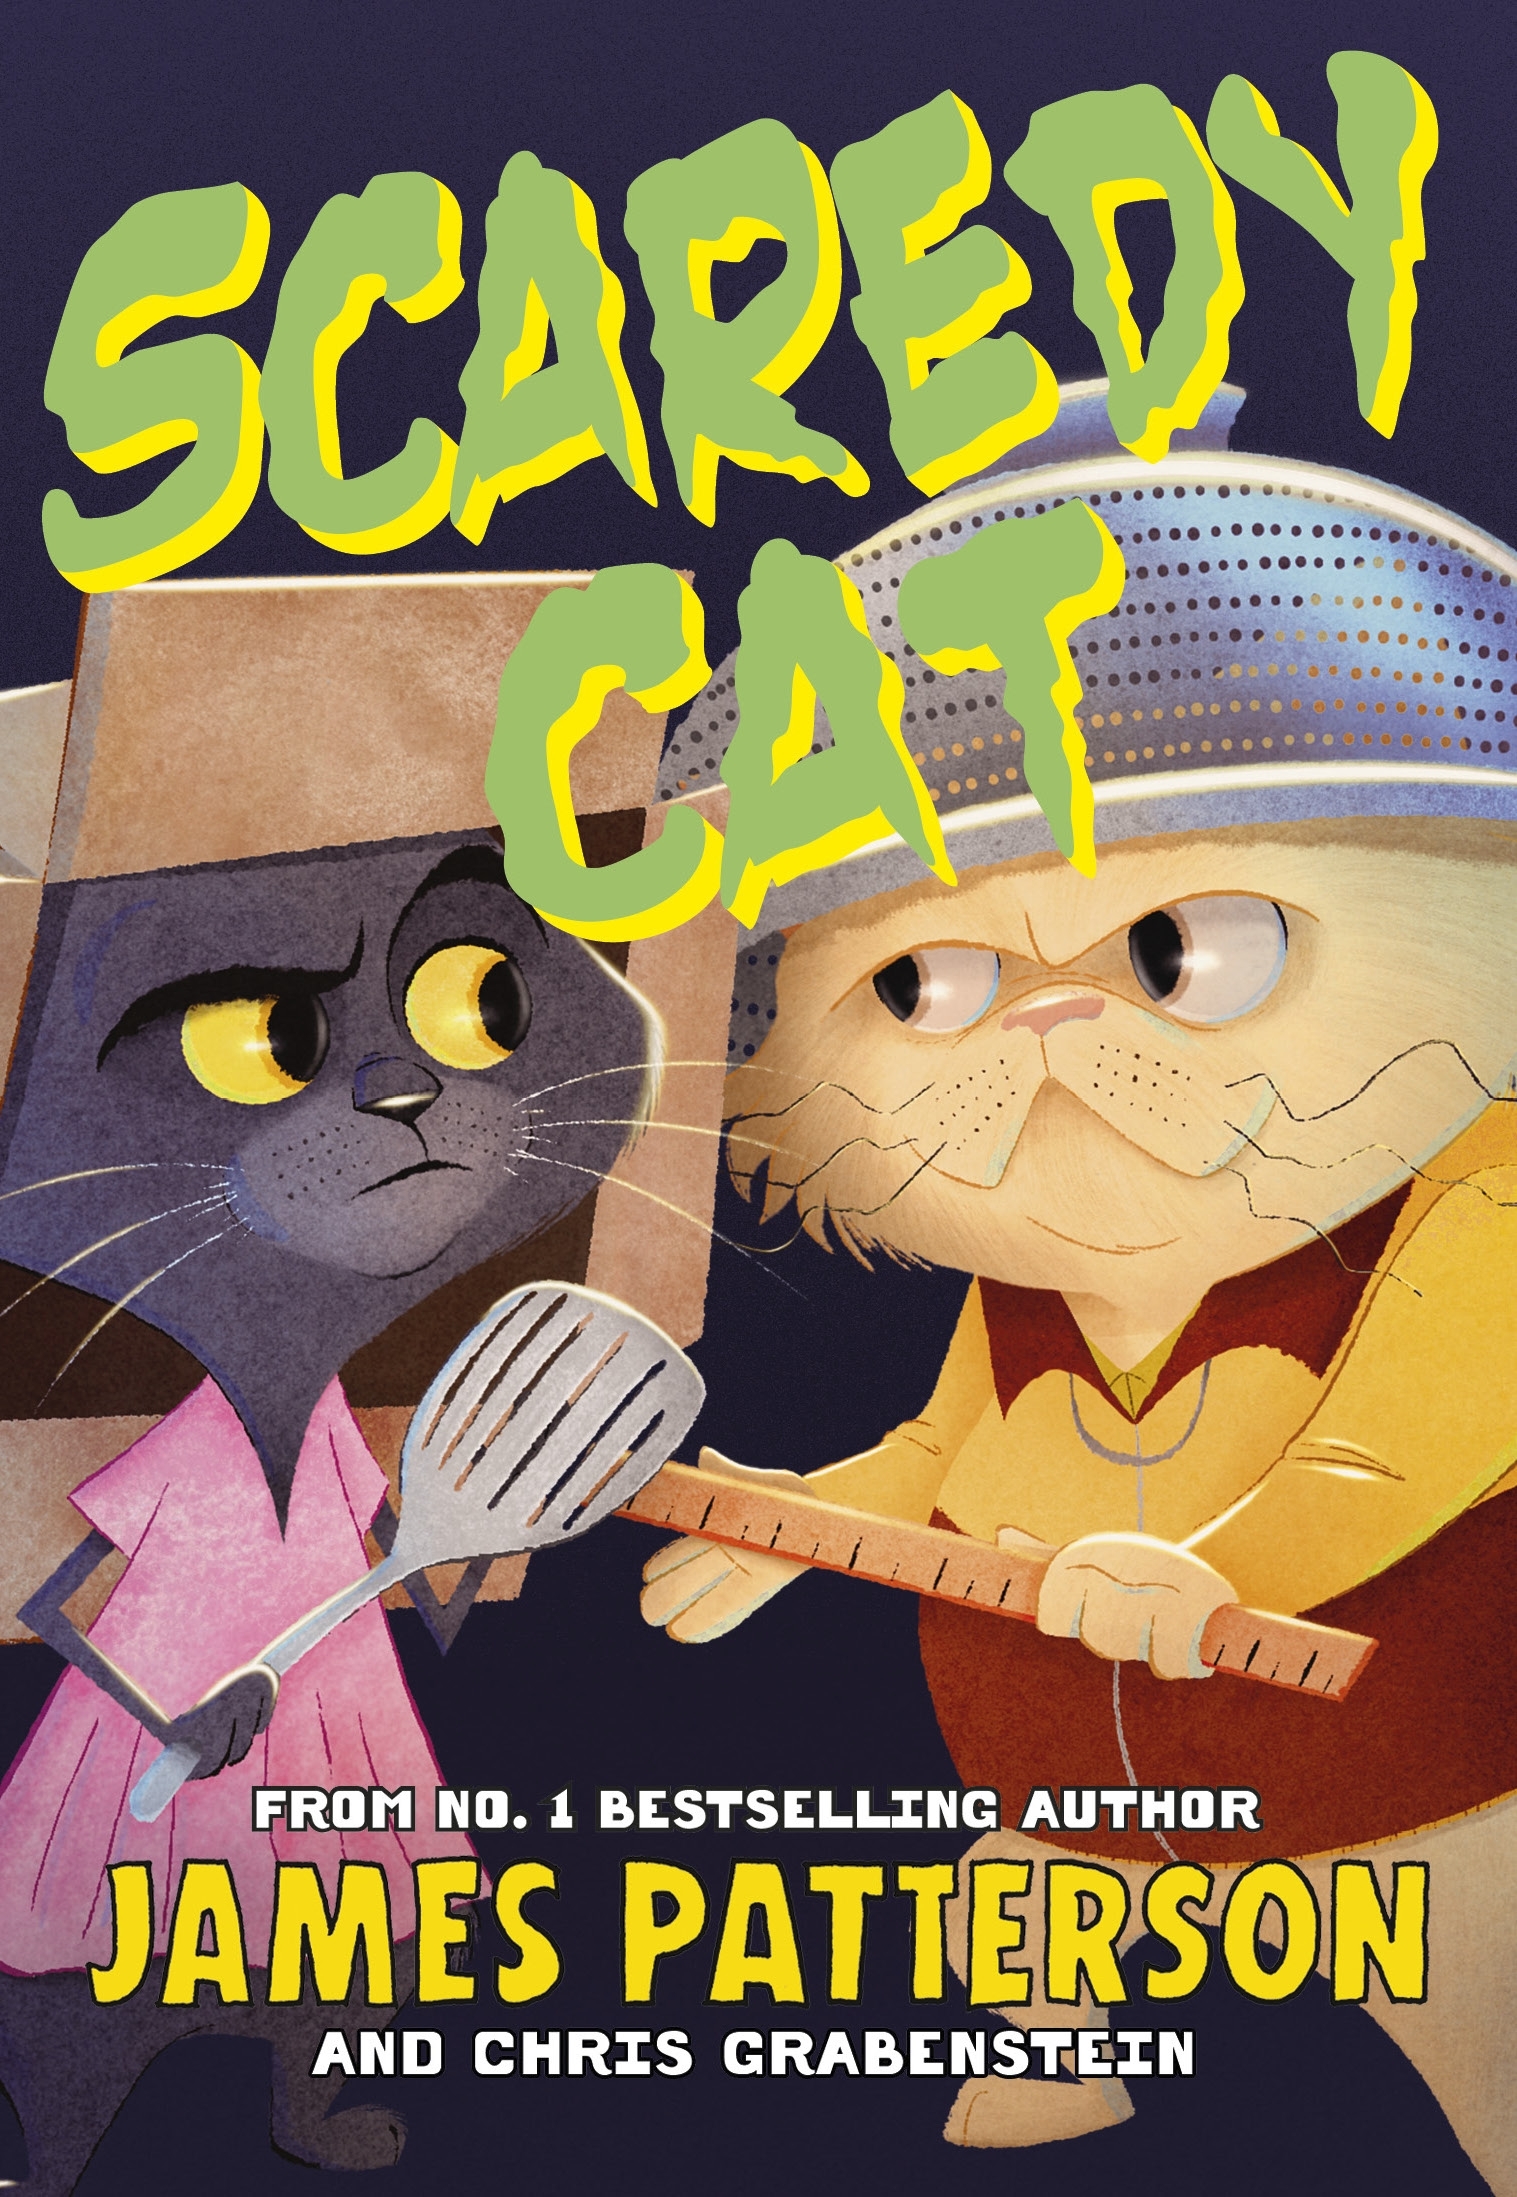 Scaredy Cats (Serie, seit 2021)